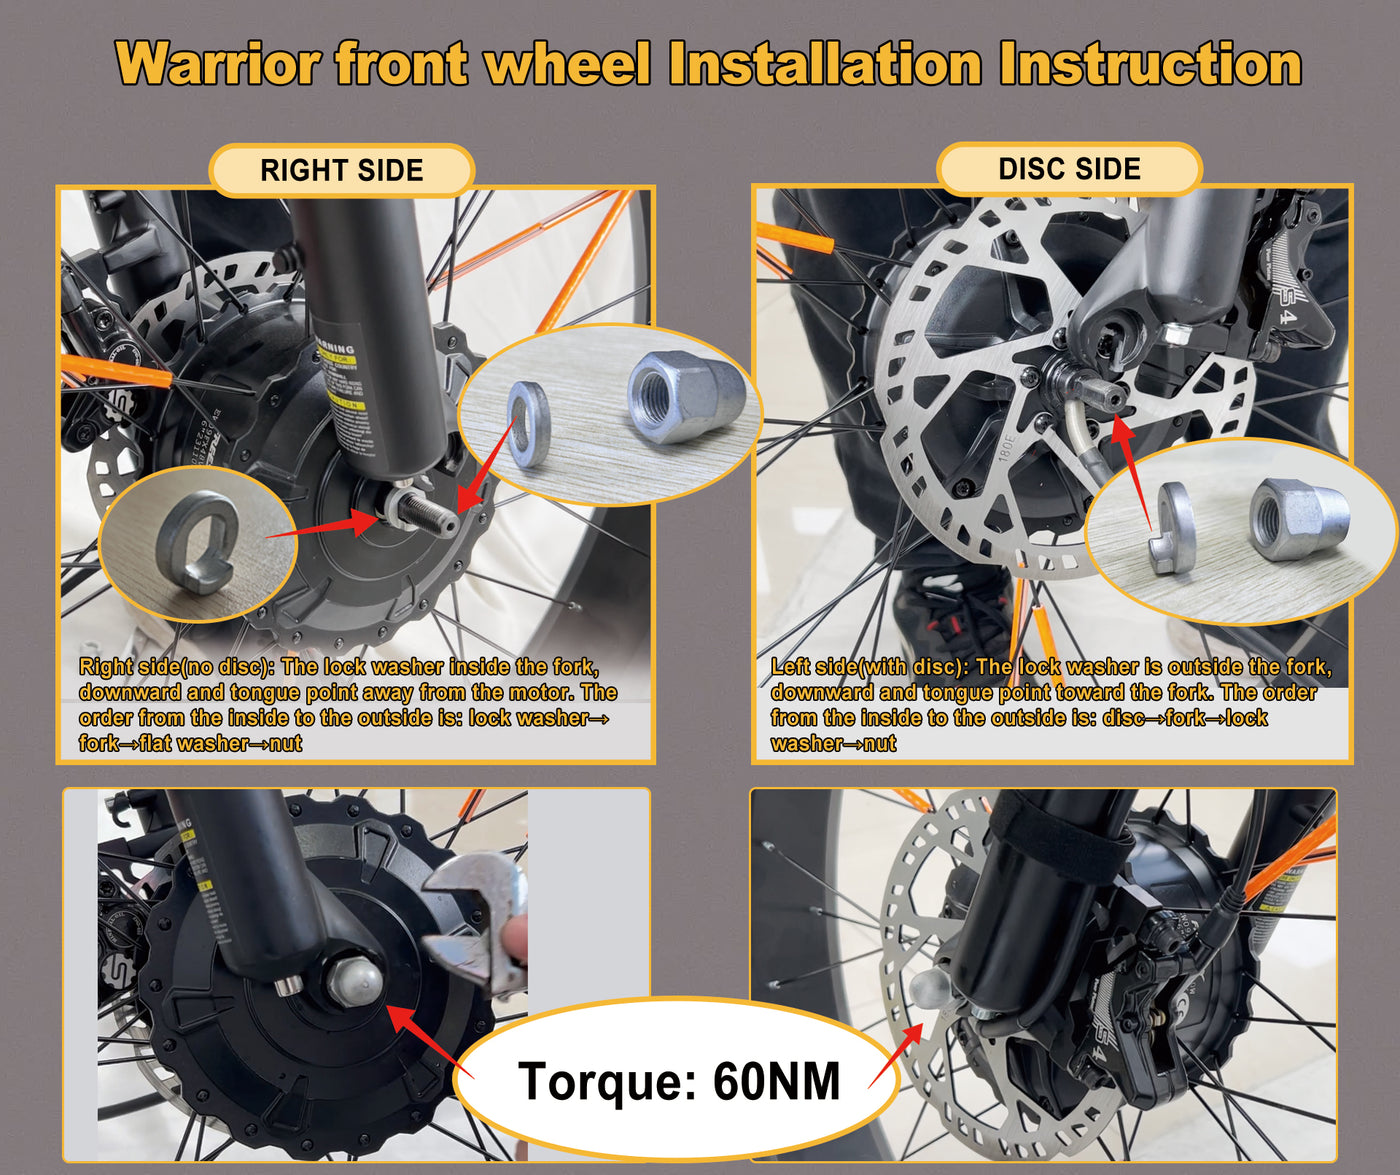 Freesky Dual Motor Electric Mountain Bike Warrior M-530 front wheel installation instruction